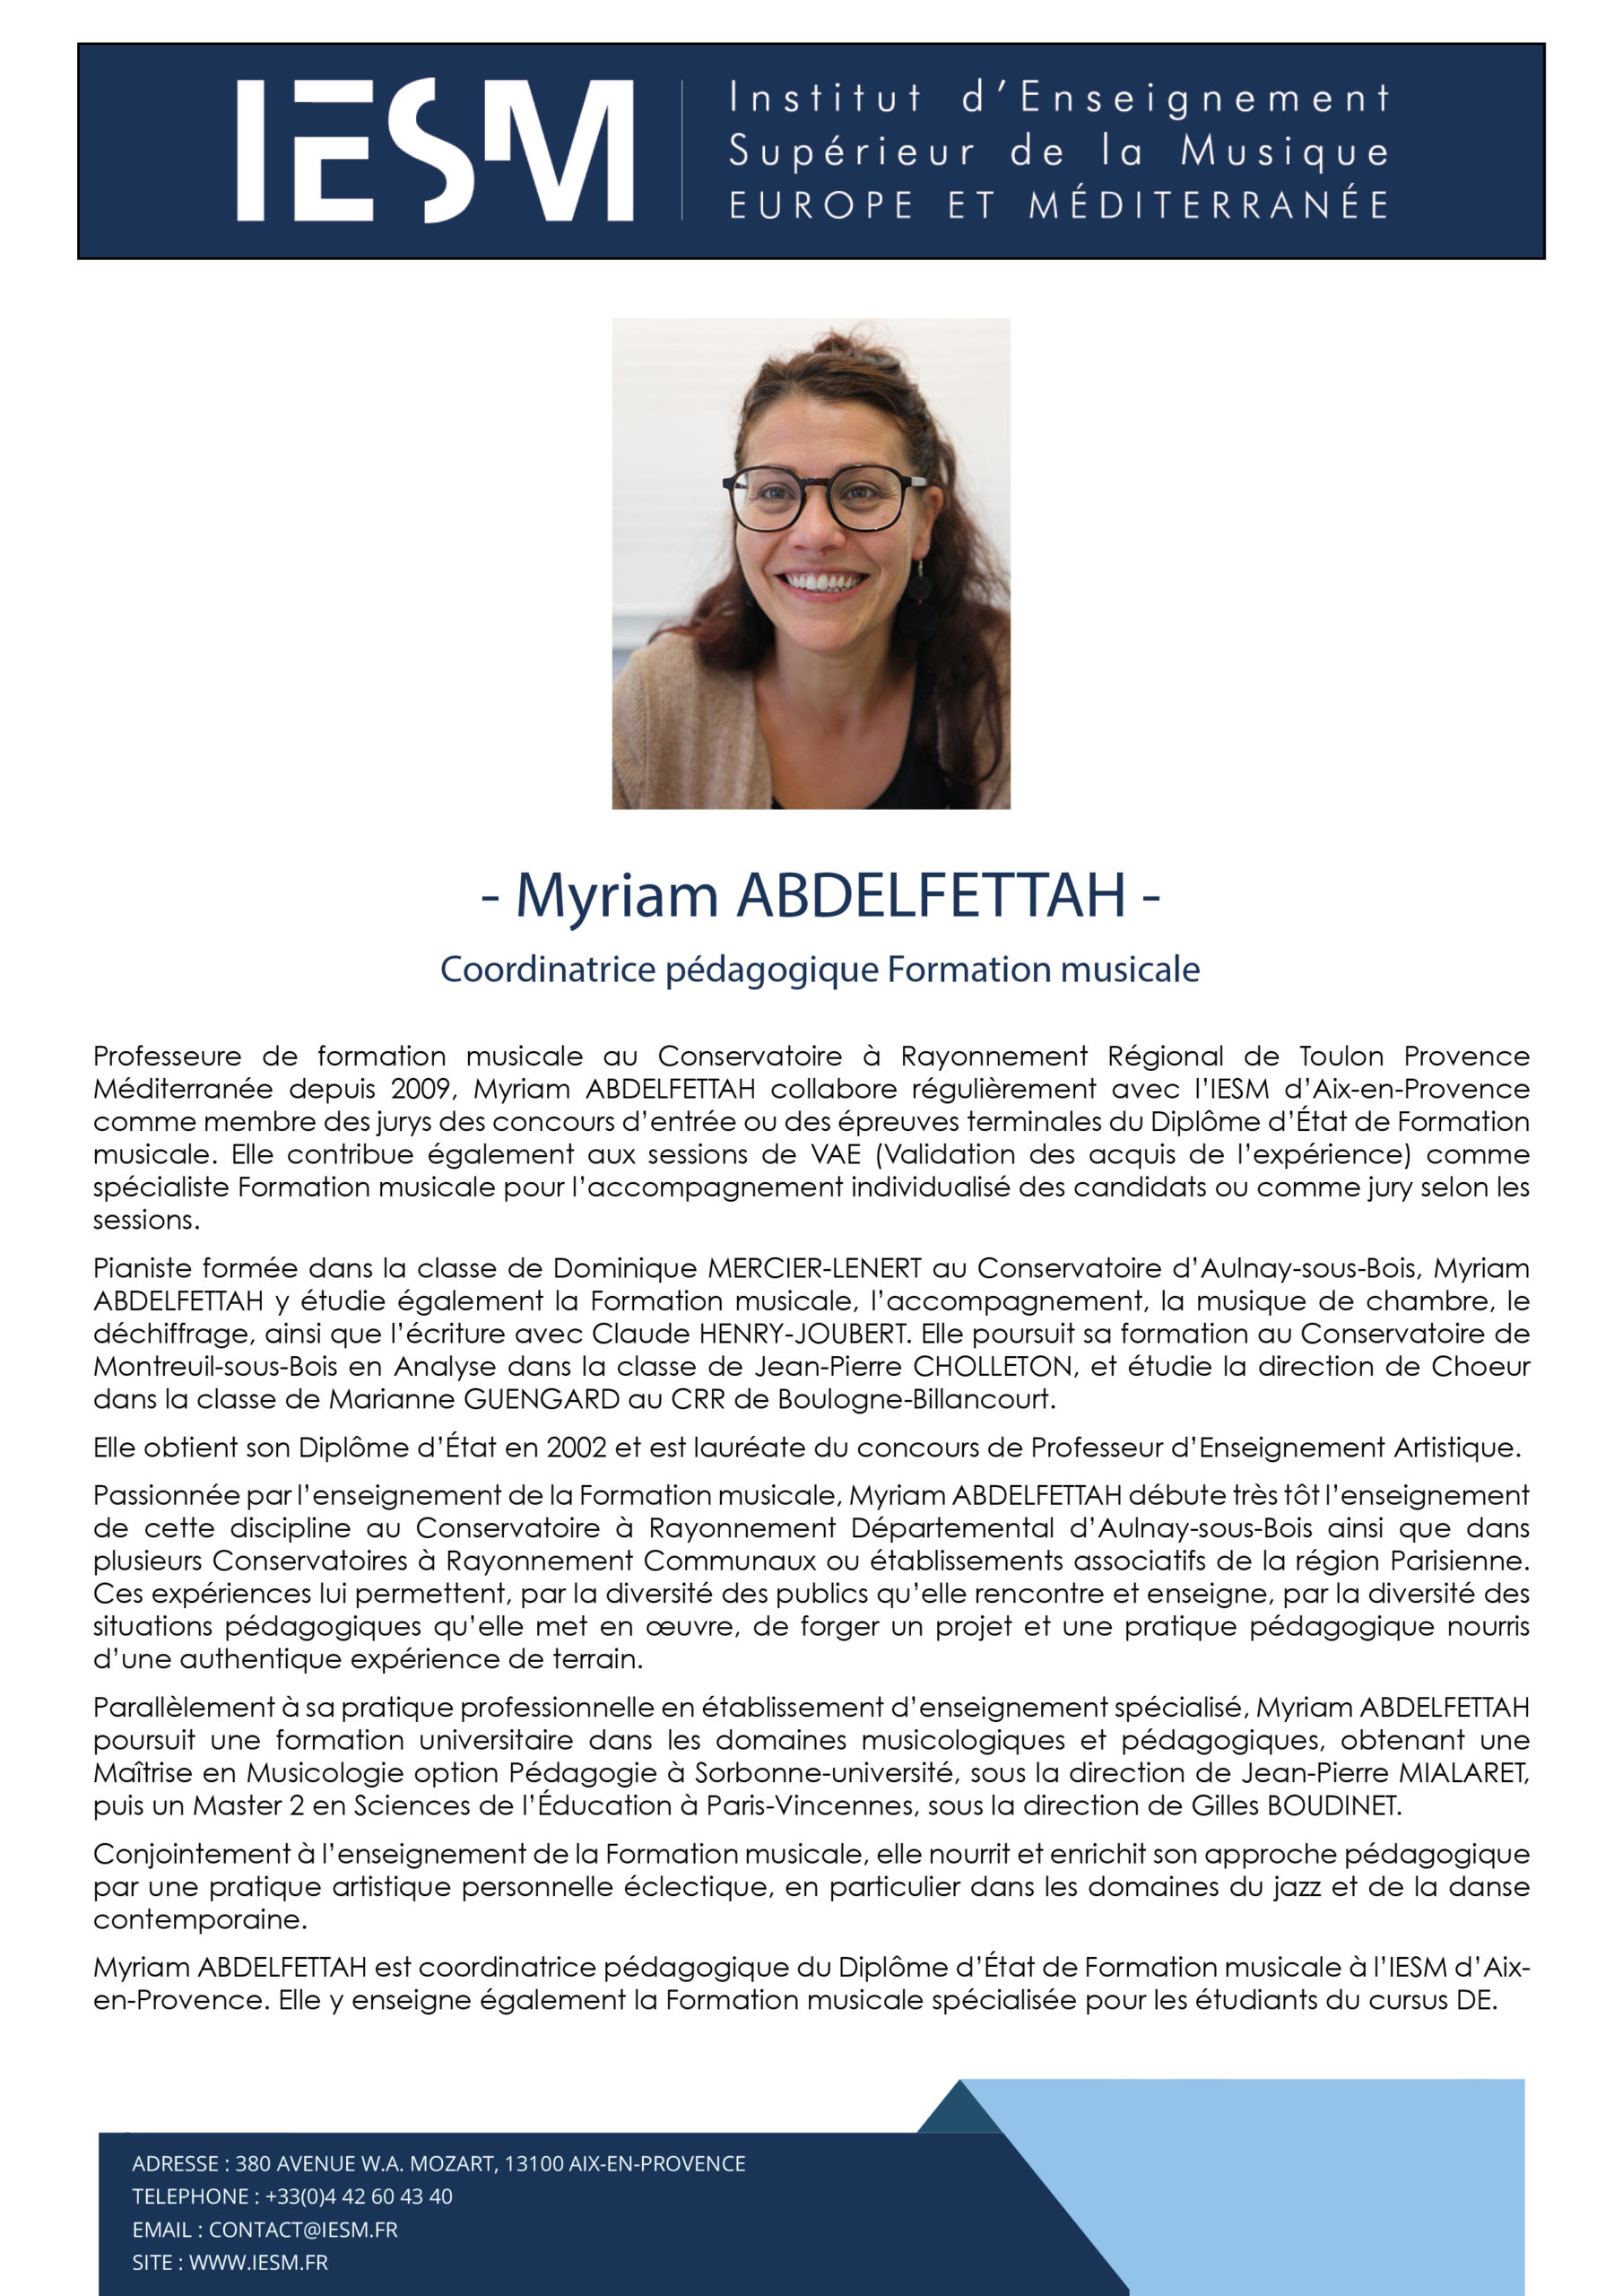 Bio Myriam ABDELFETTAH 1 scaled